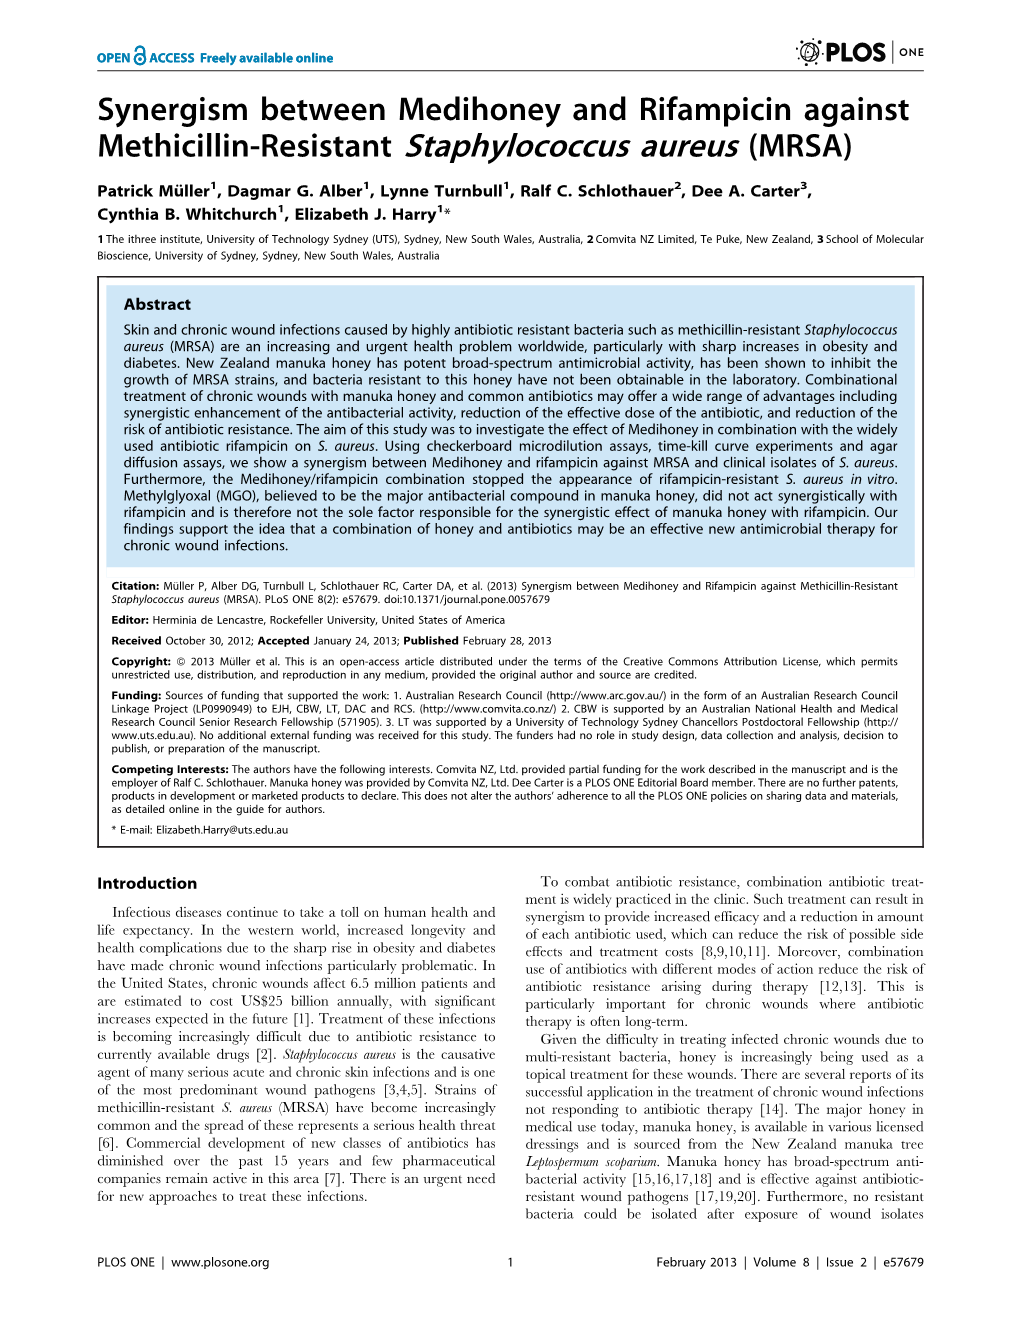 Synergism Between Medihoney and Rifampicin Against Methicillin-Resistant Staphylococcus Aureus (MRSA)